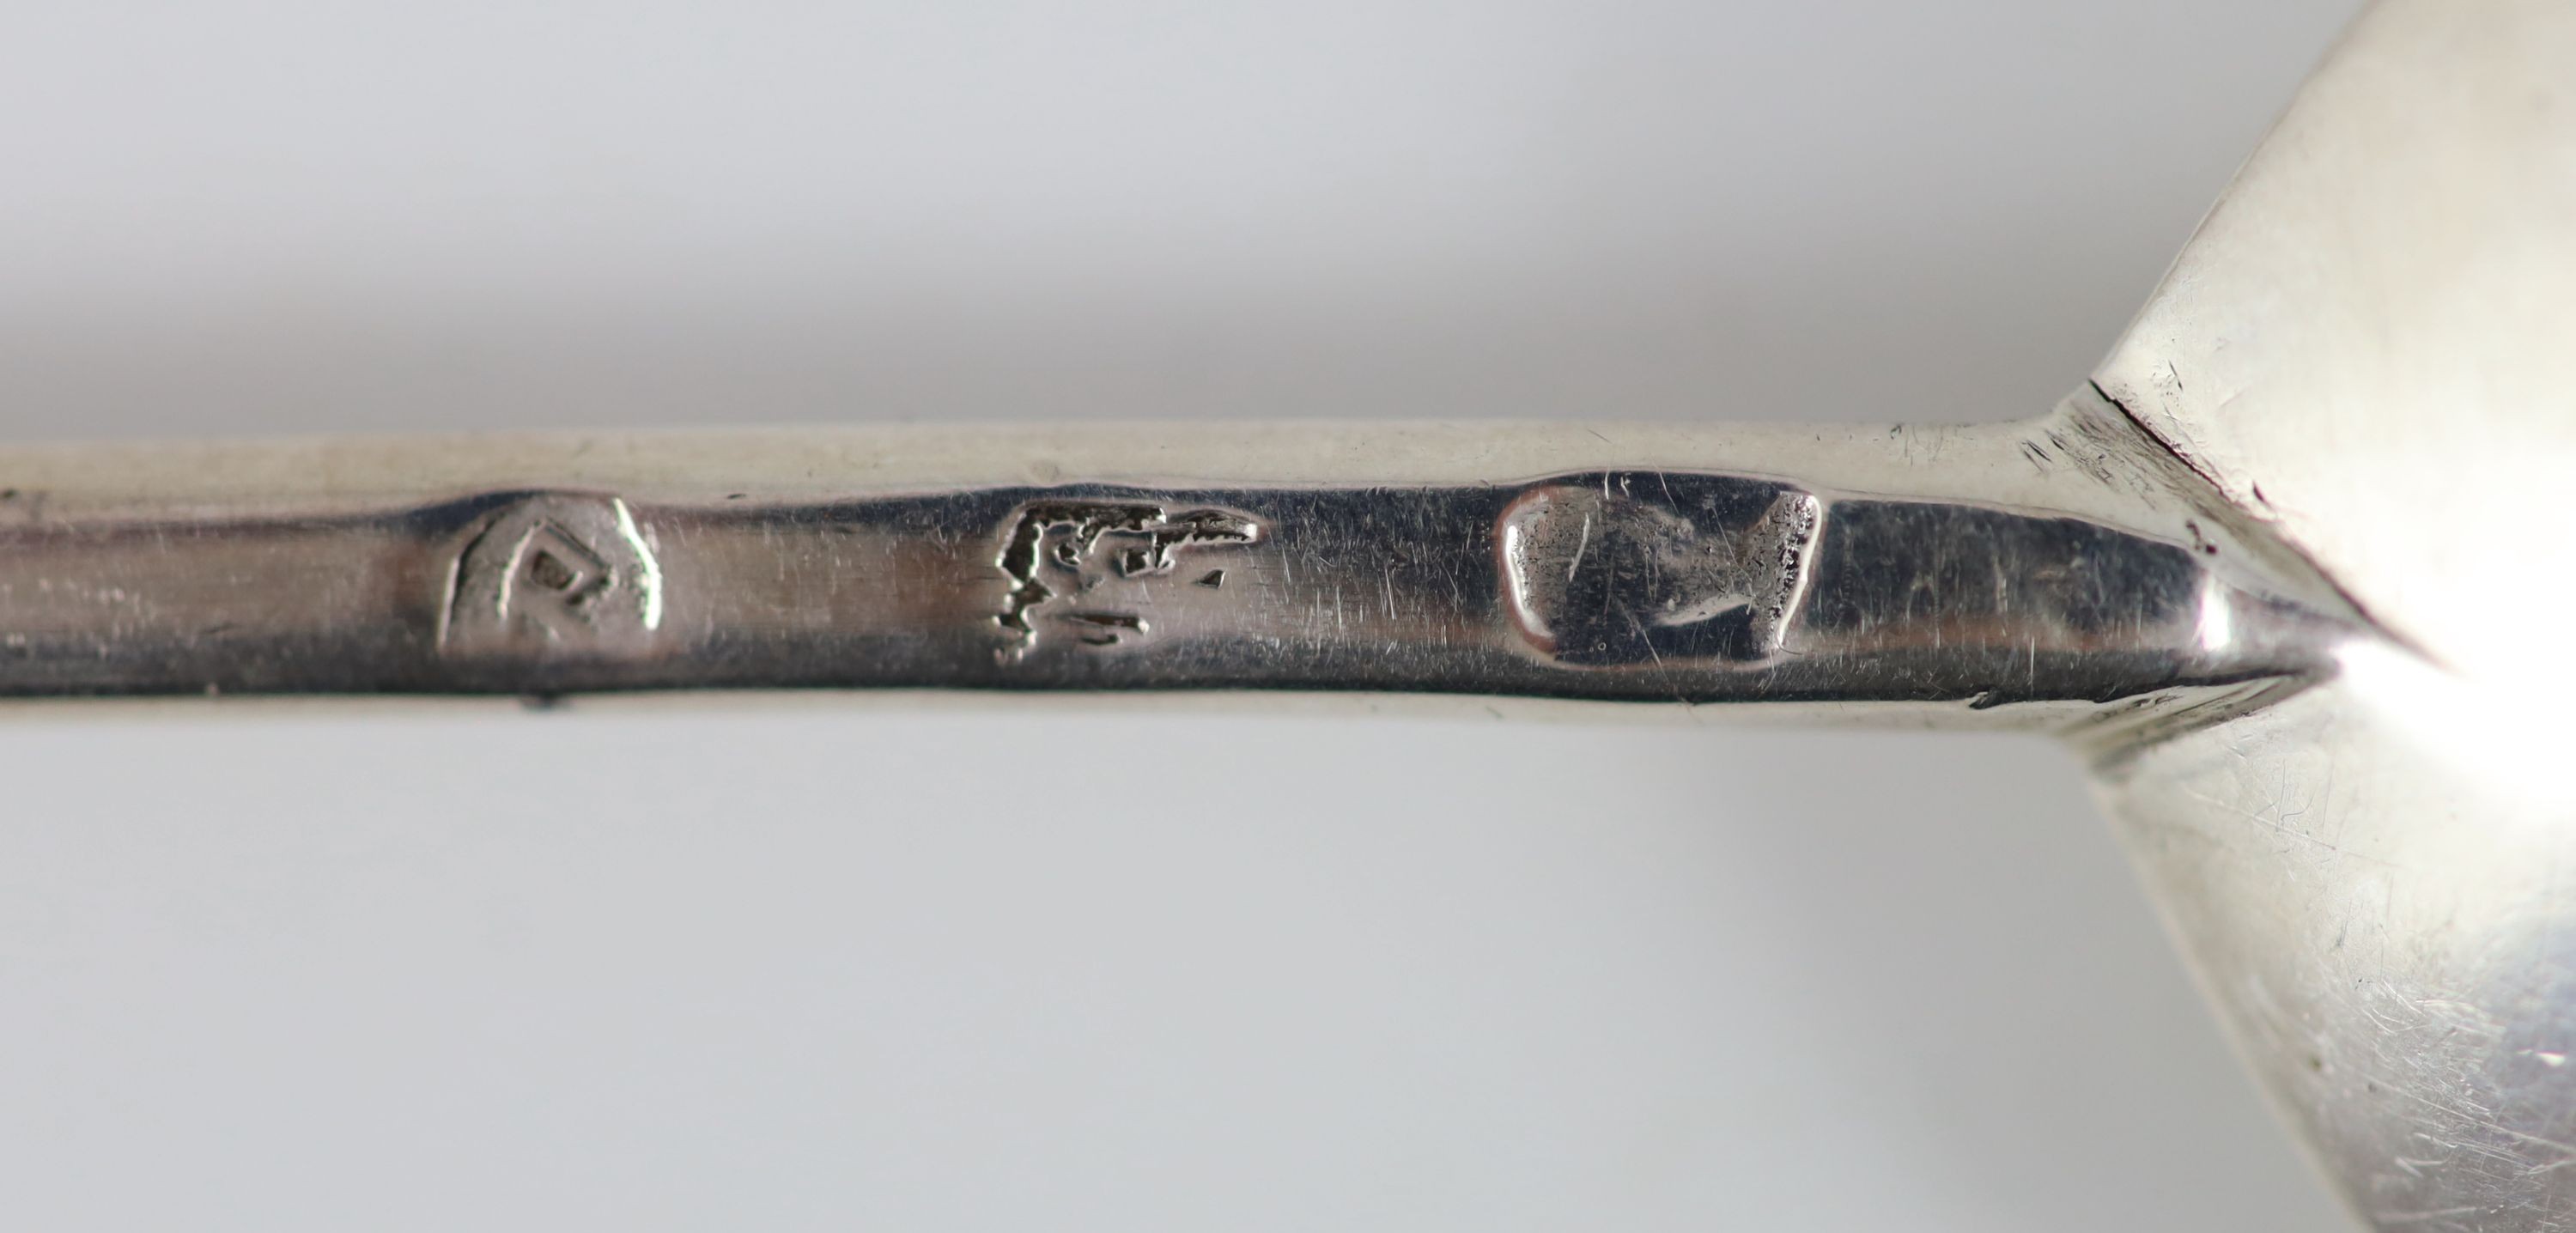 A mid 17th century silver seal top spoon